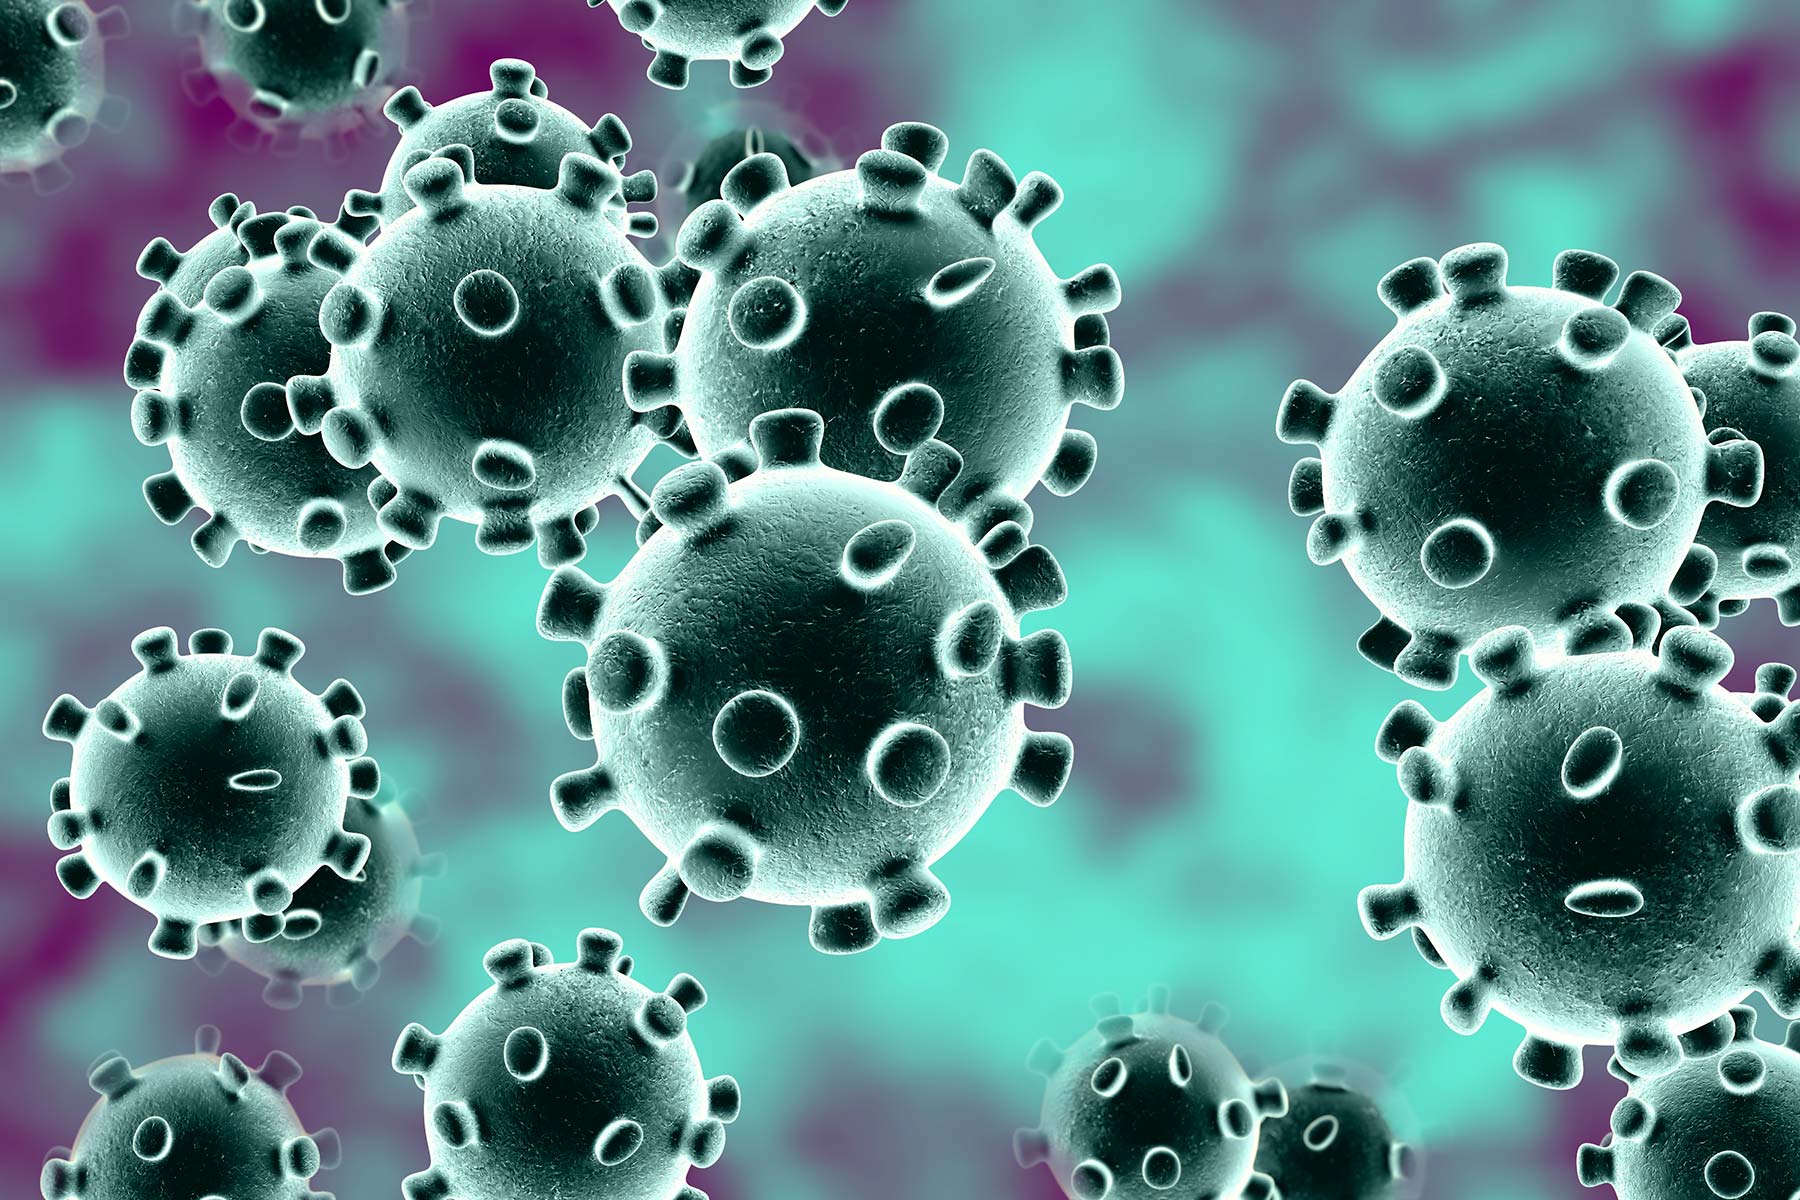 BREAKING: Lagos Now Have 3 Suspected Case Of Coronavirus